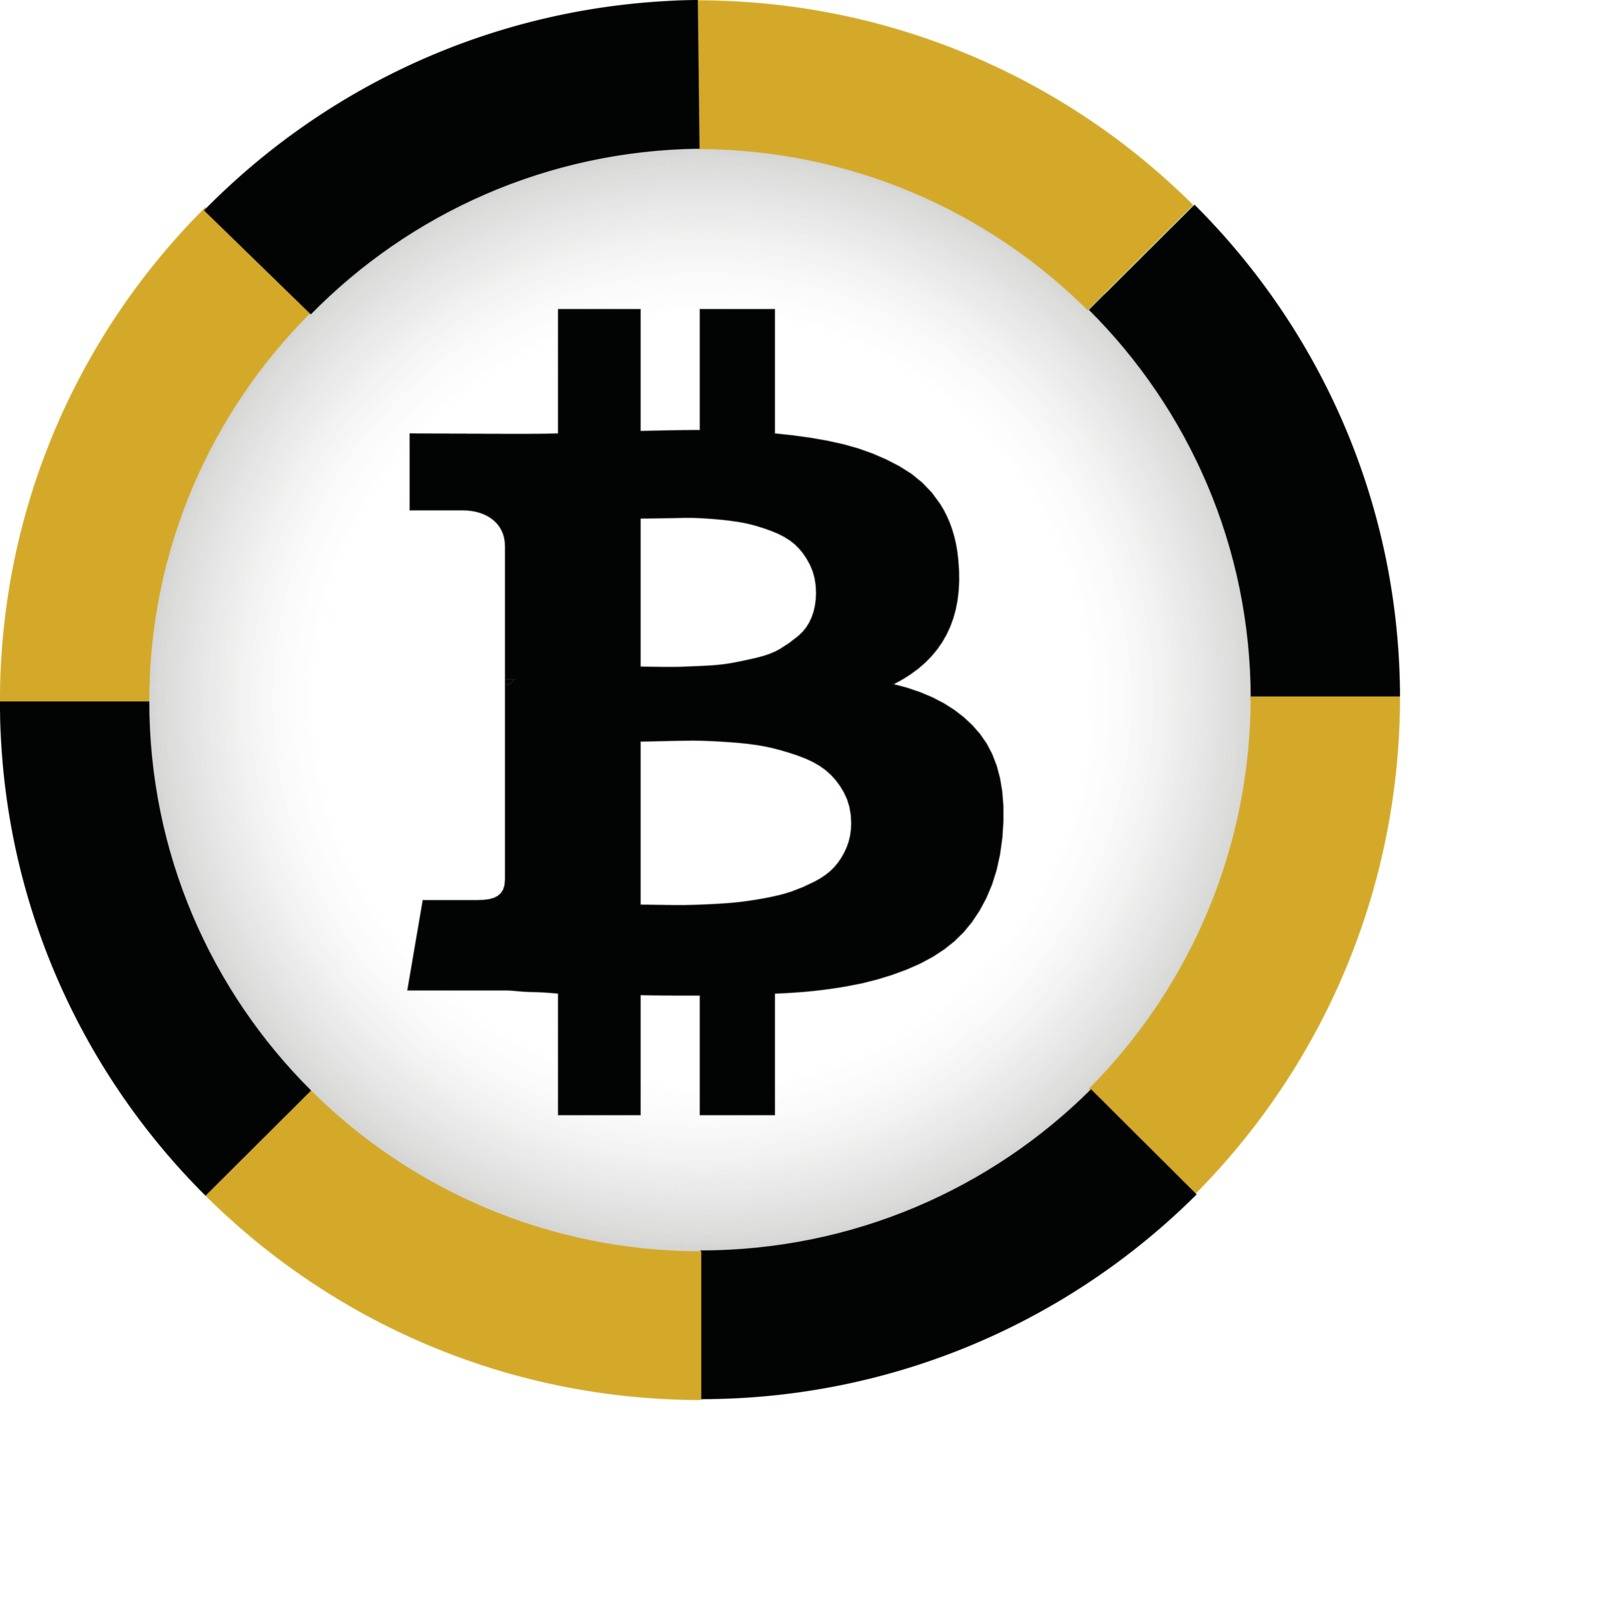 Bitcoin symbol in flat design. Vector